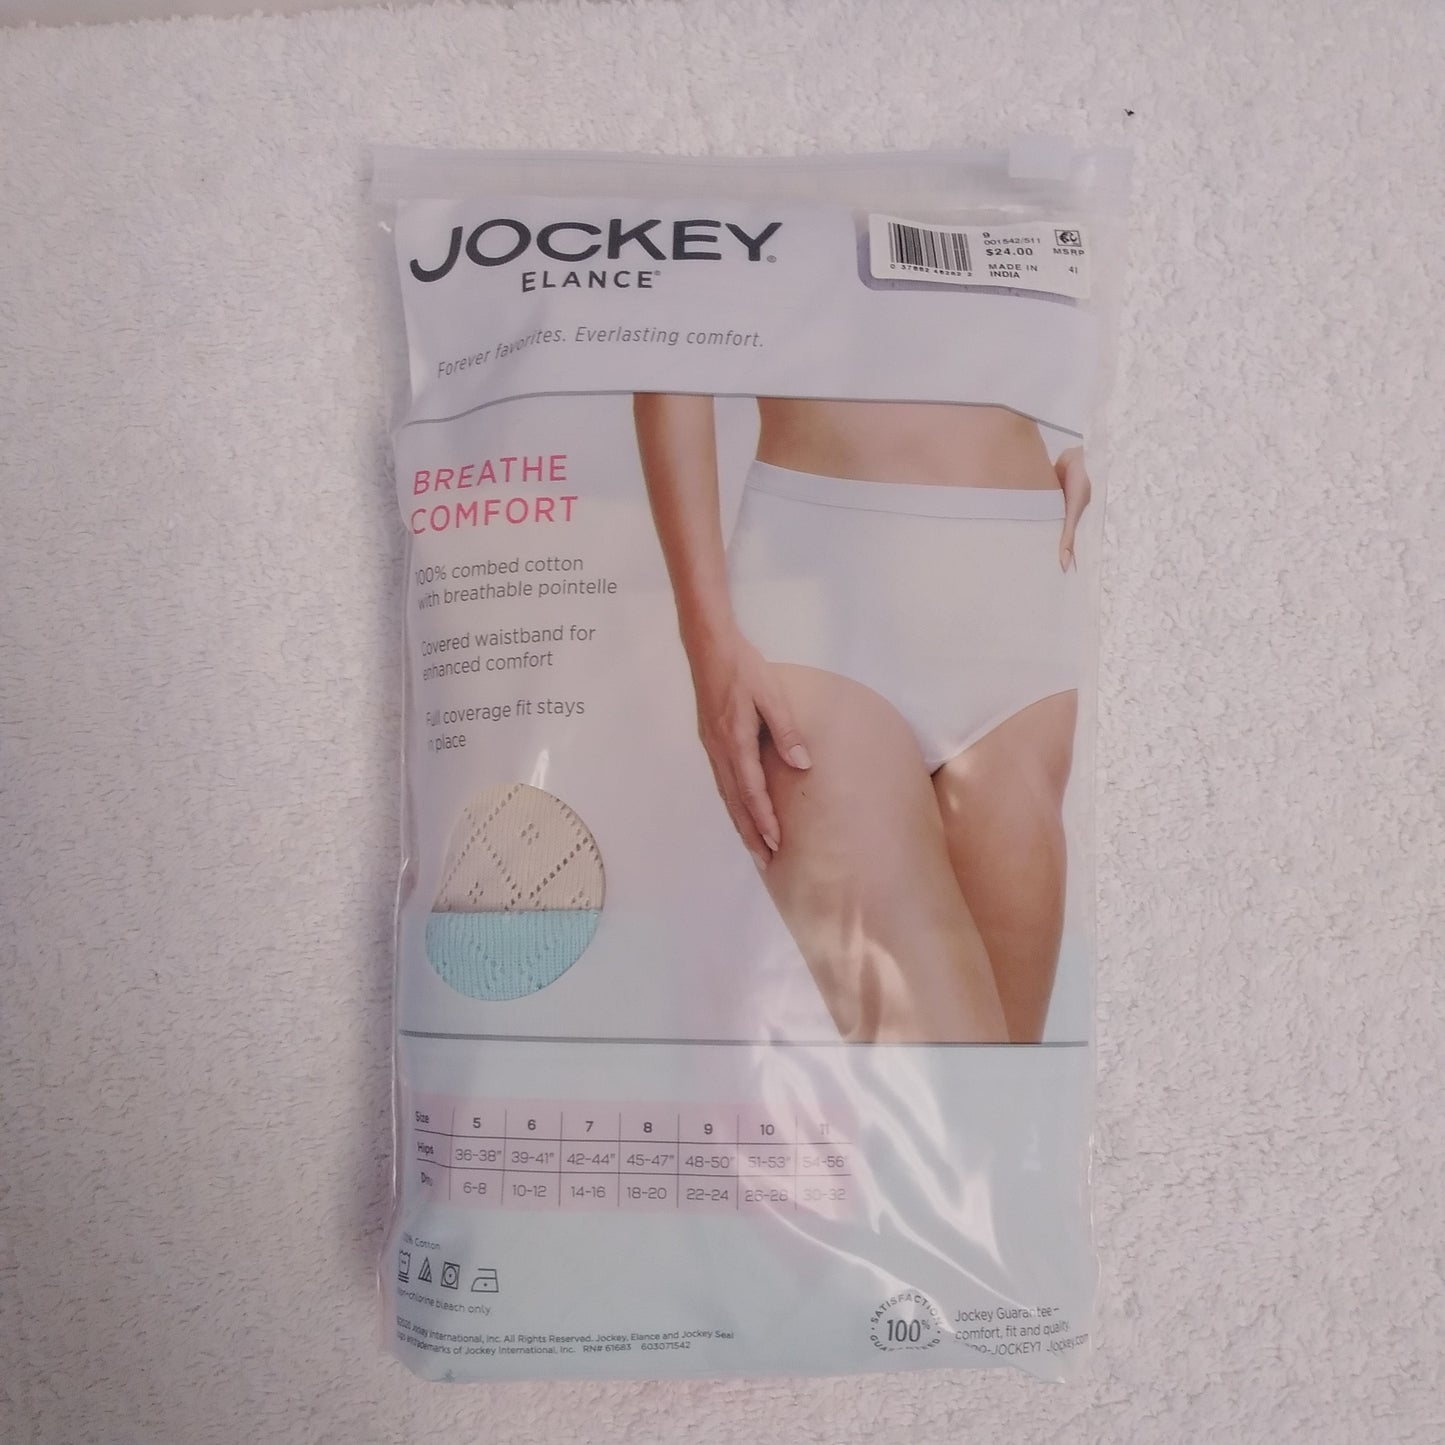 NWT - Jockey Elance Breathe Comfort 100% Cotton Brief Panties 3-Pack - Size: 9/XXL